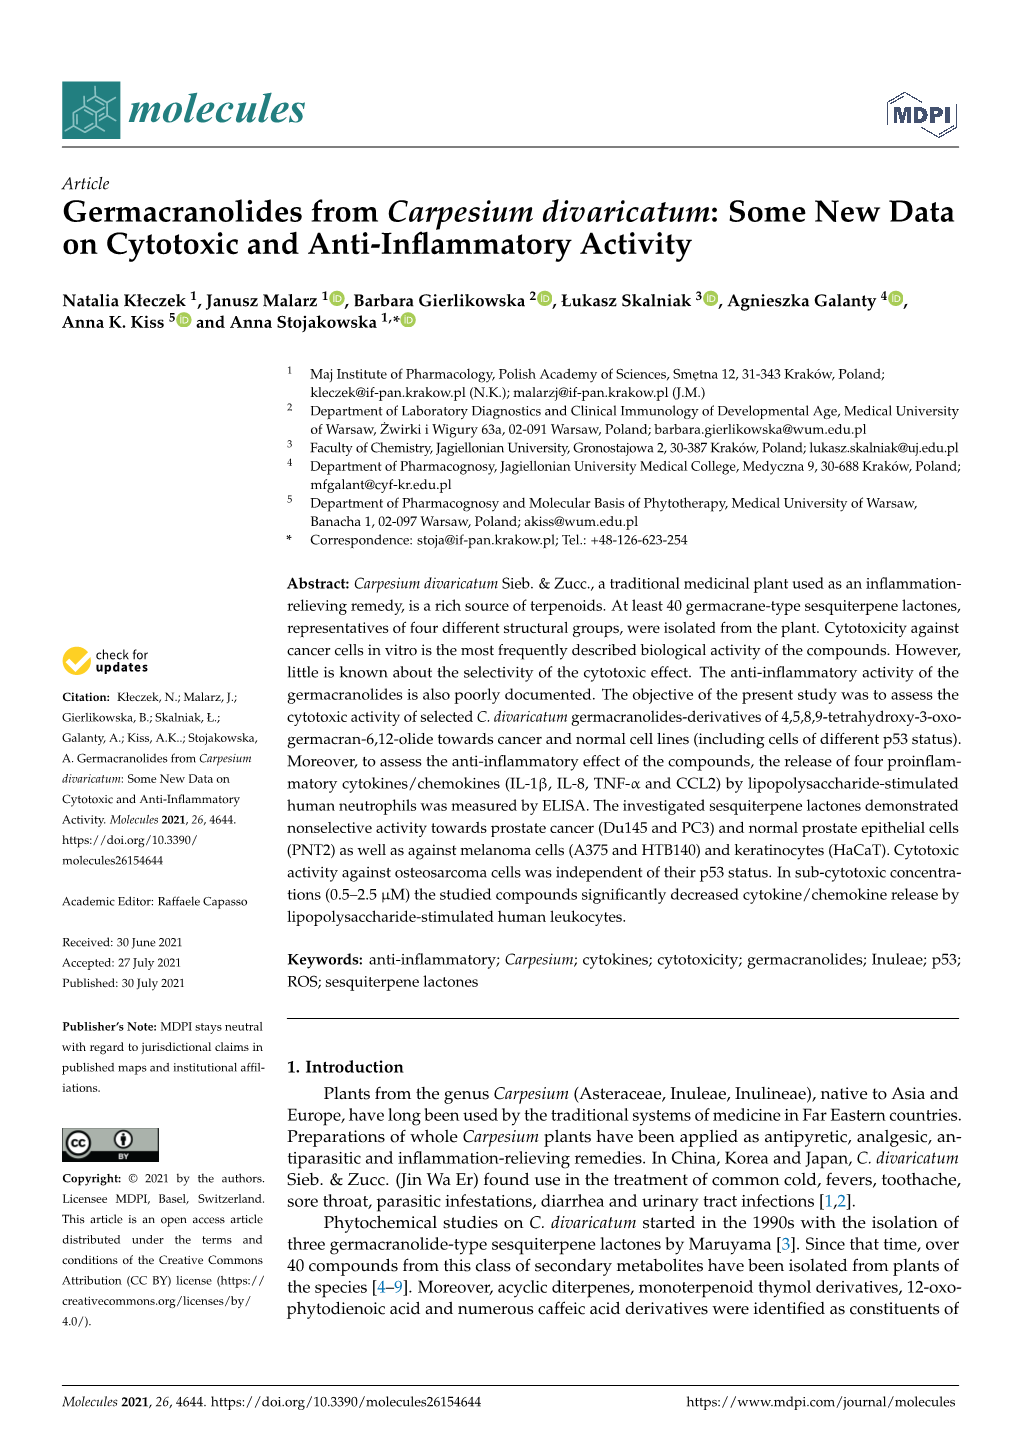 Germacranolides from Carpesium Divaricatum: Some New Data on Cytotoxic and Anti-Inﬂammatory Activity